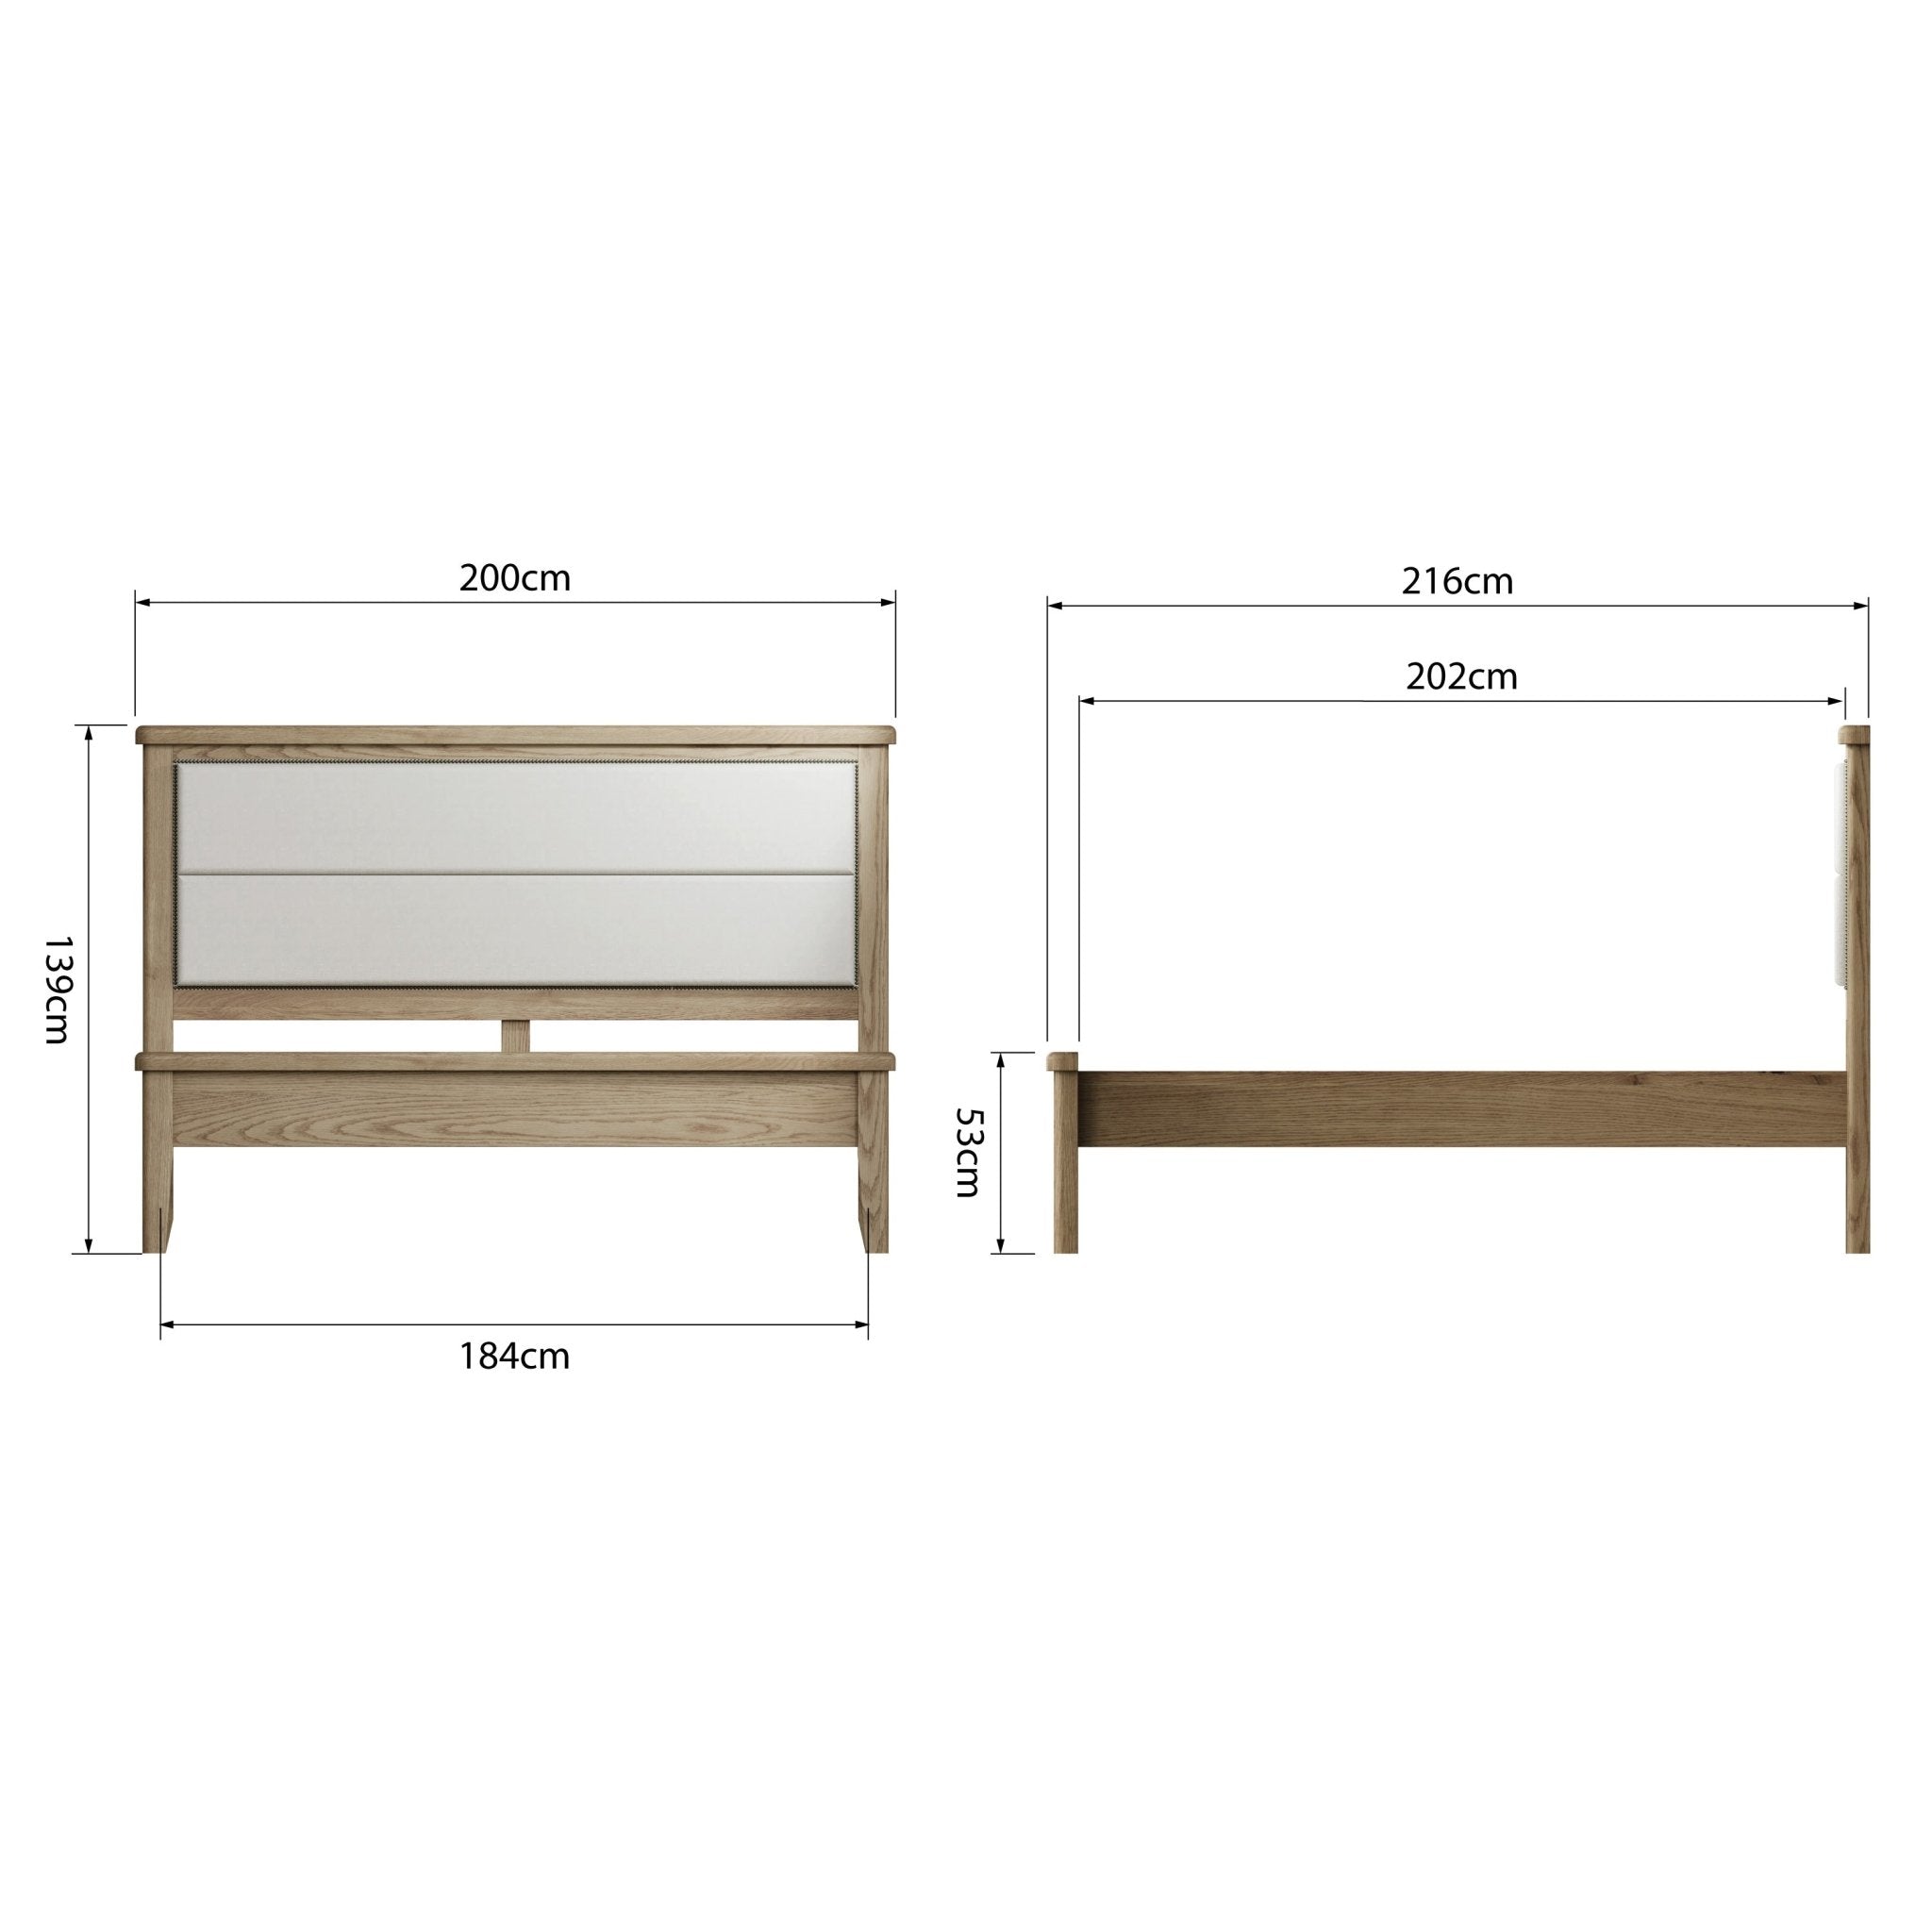 Rusper Oak 6'0 Super King size Bed Frame - Fabric Headboard - Duck Barn Interiors